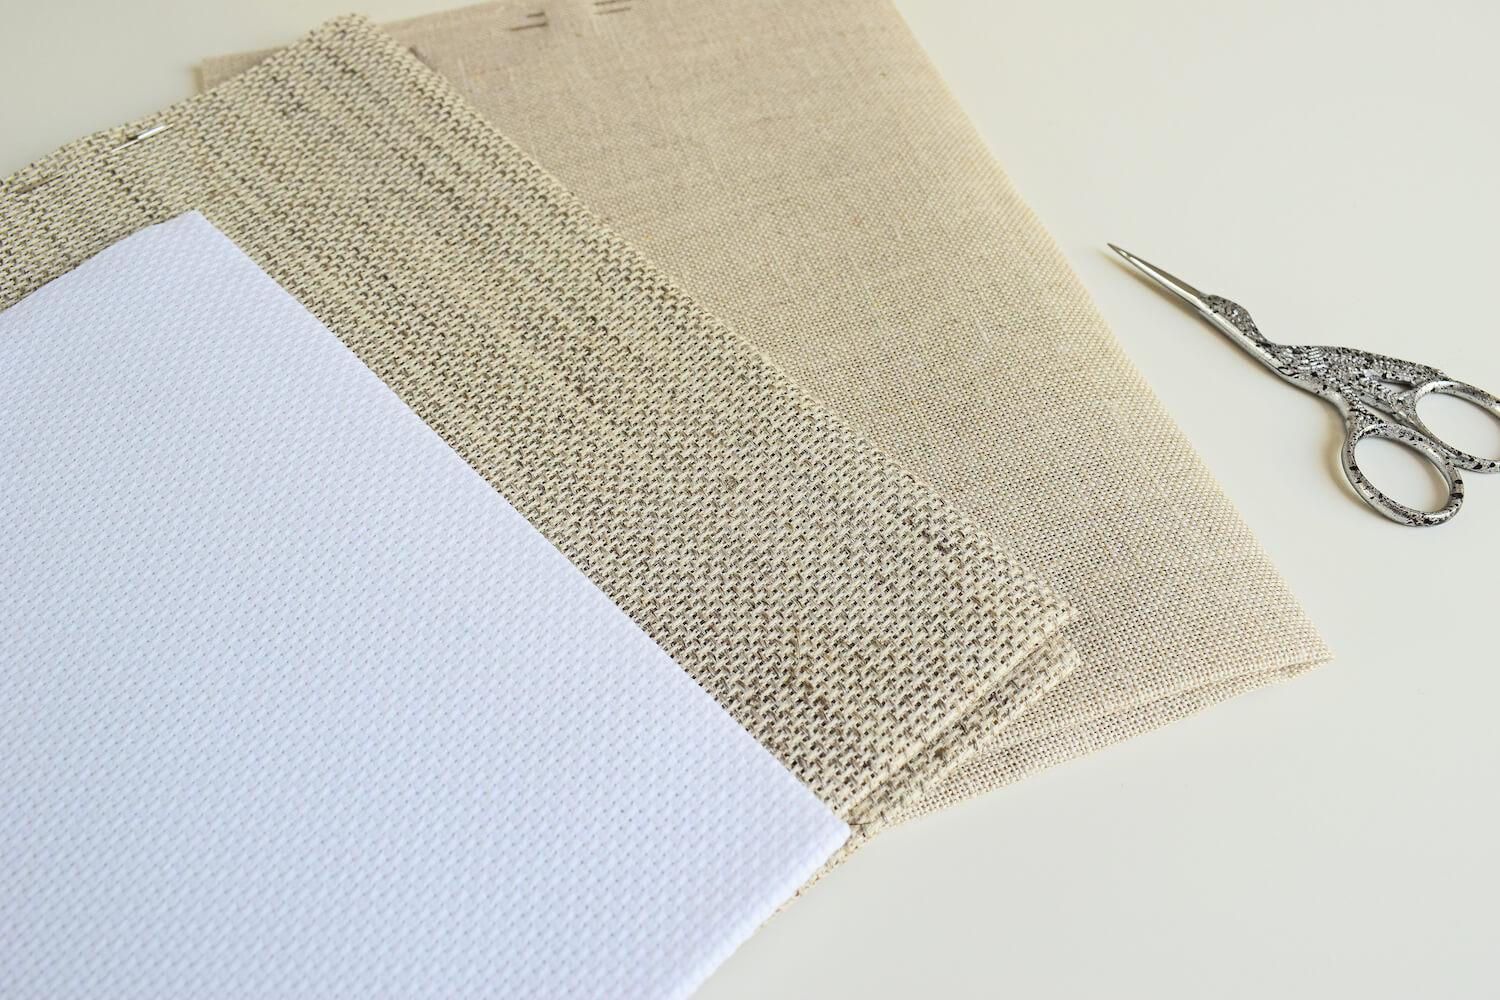 Cross stitch fabrics explained